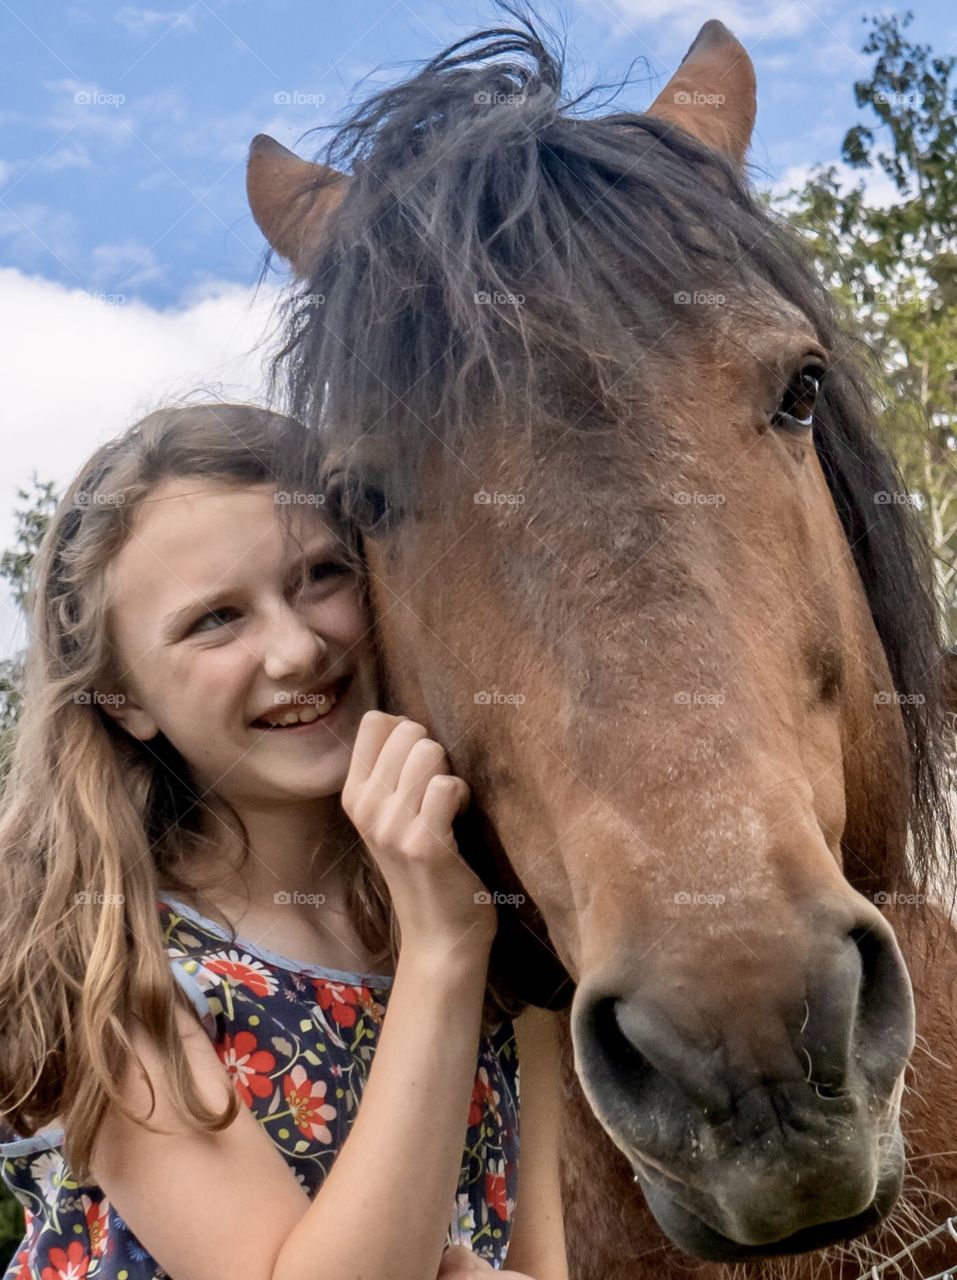 Girl and horse selfie - closeup faces